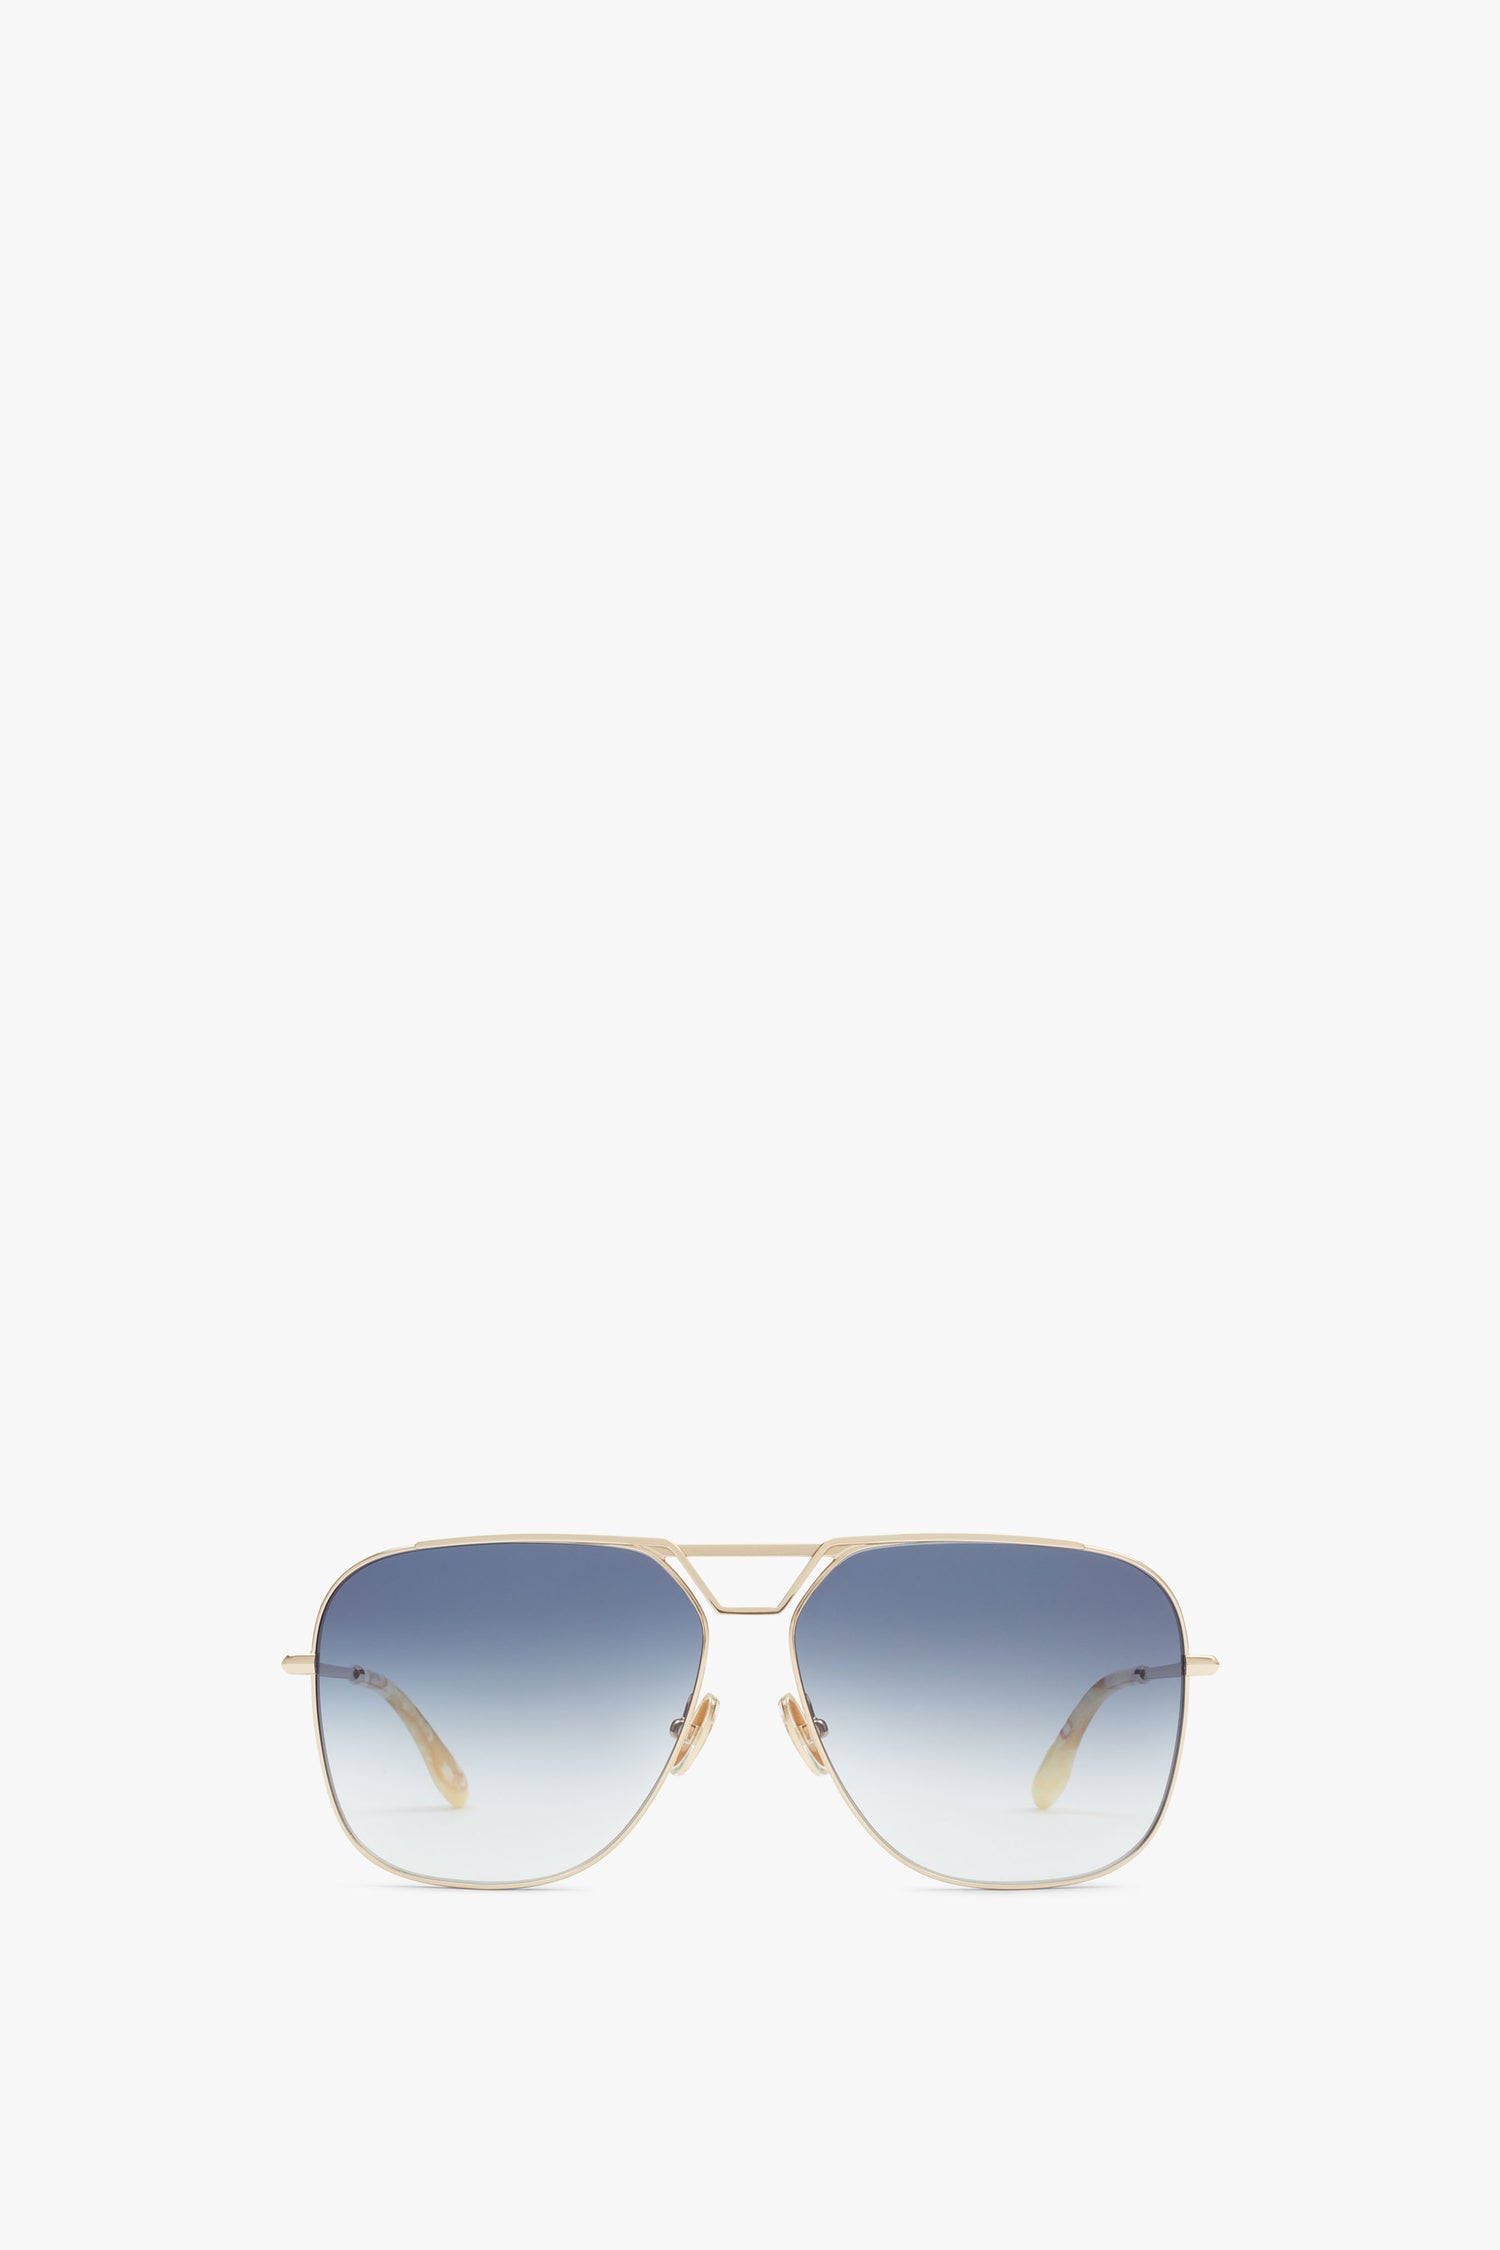 Blue Mirror Aviator Sunglasses gold Frame Hot Famous Cool Sunglasses Men  Women = 5660735105